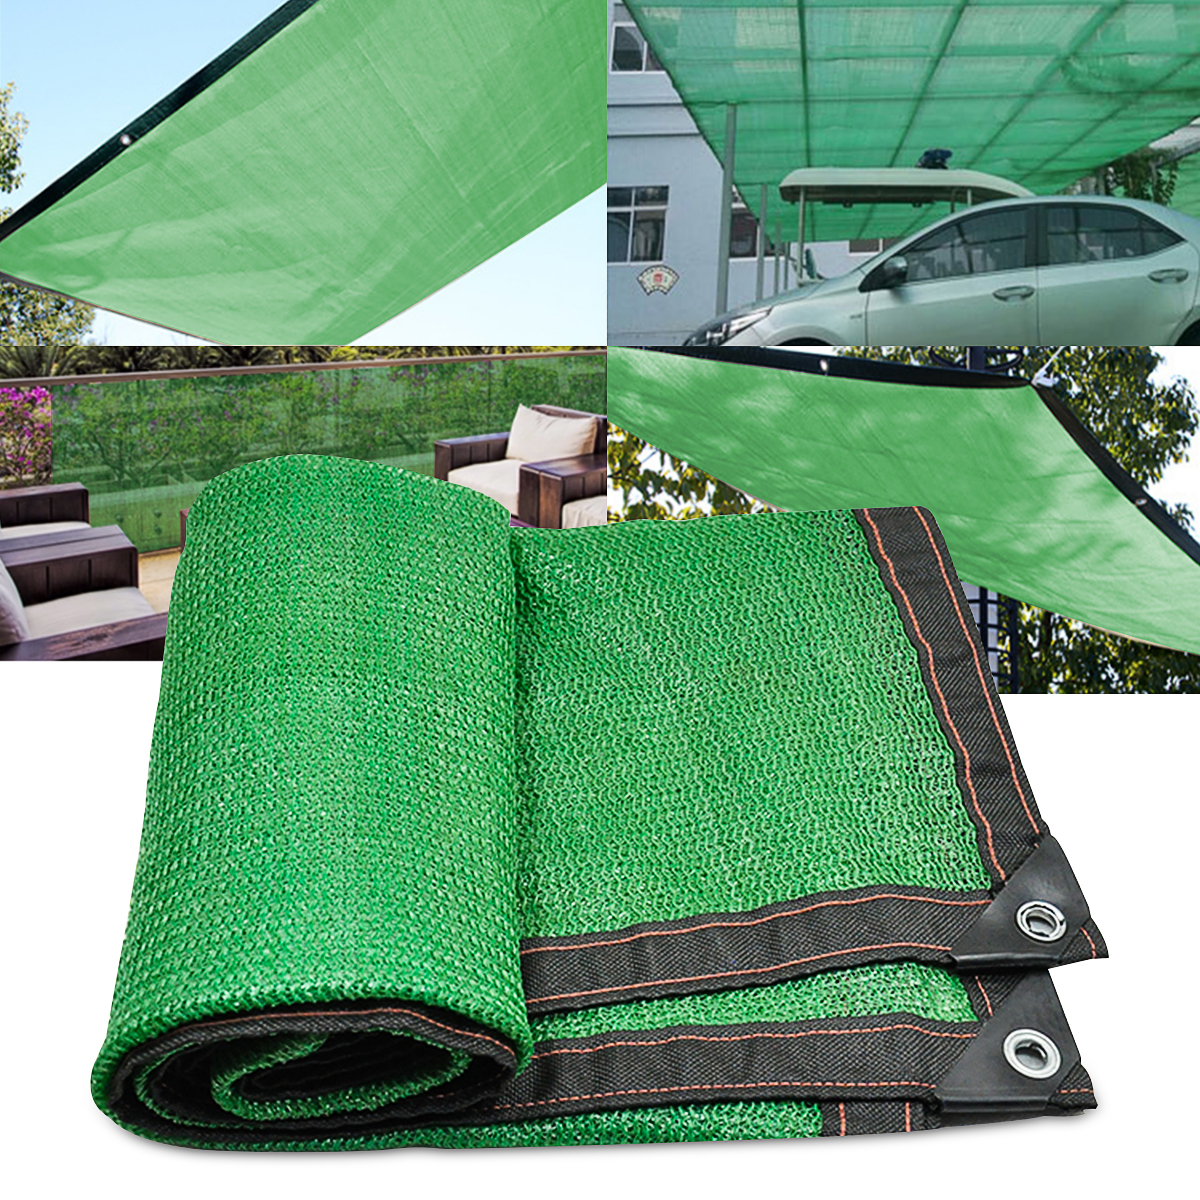 Sunshade-Net-Sail-Awning-Cover-Outdoor-Garden-Canopy-6-Stitches-80-Sunshade-Green-Net-1564346-2